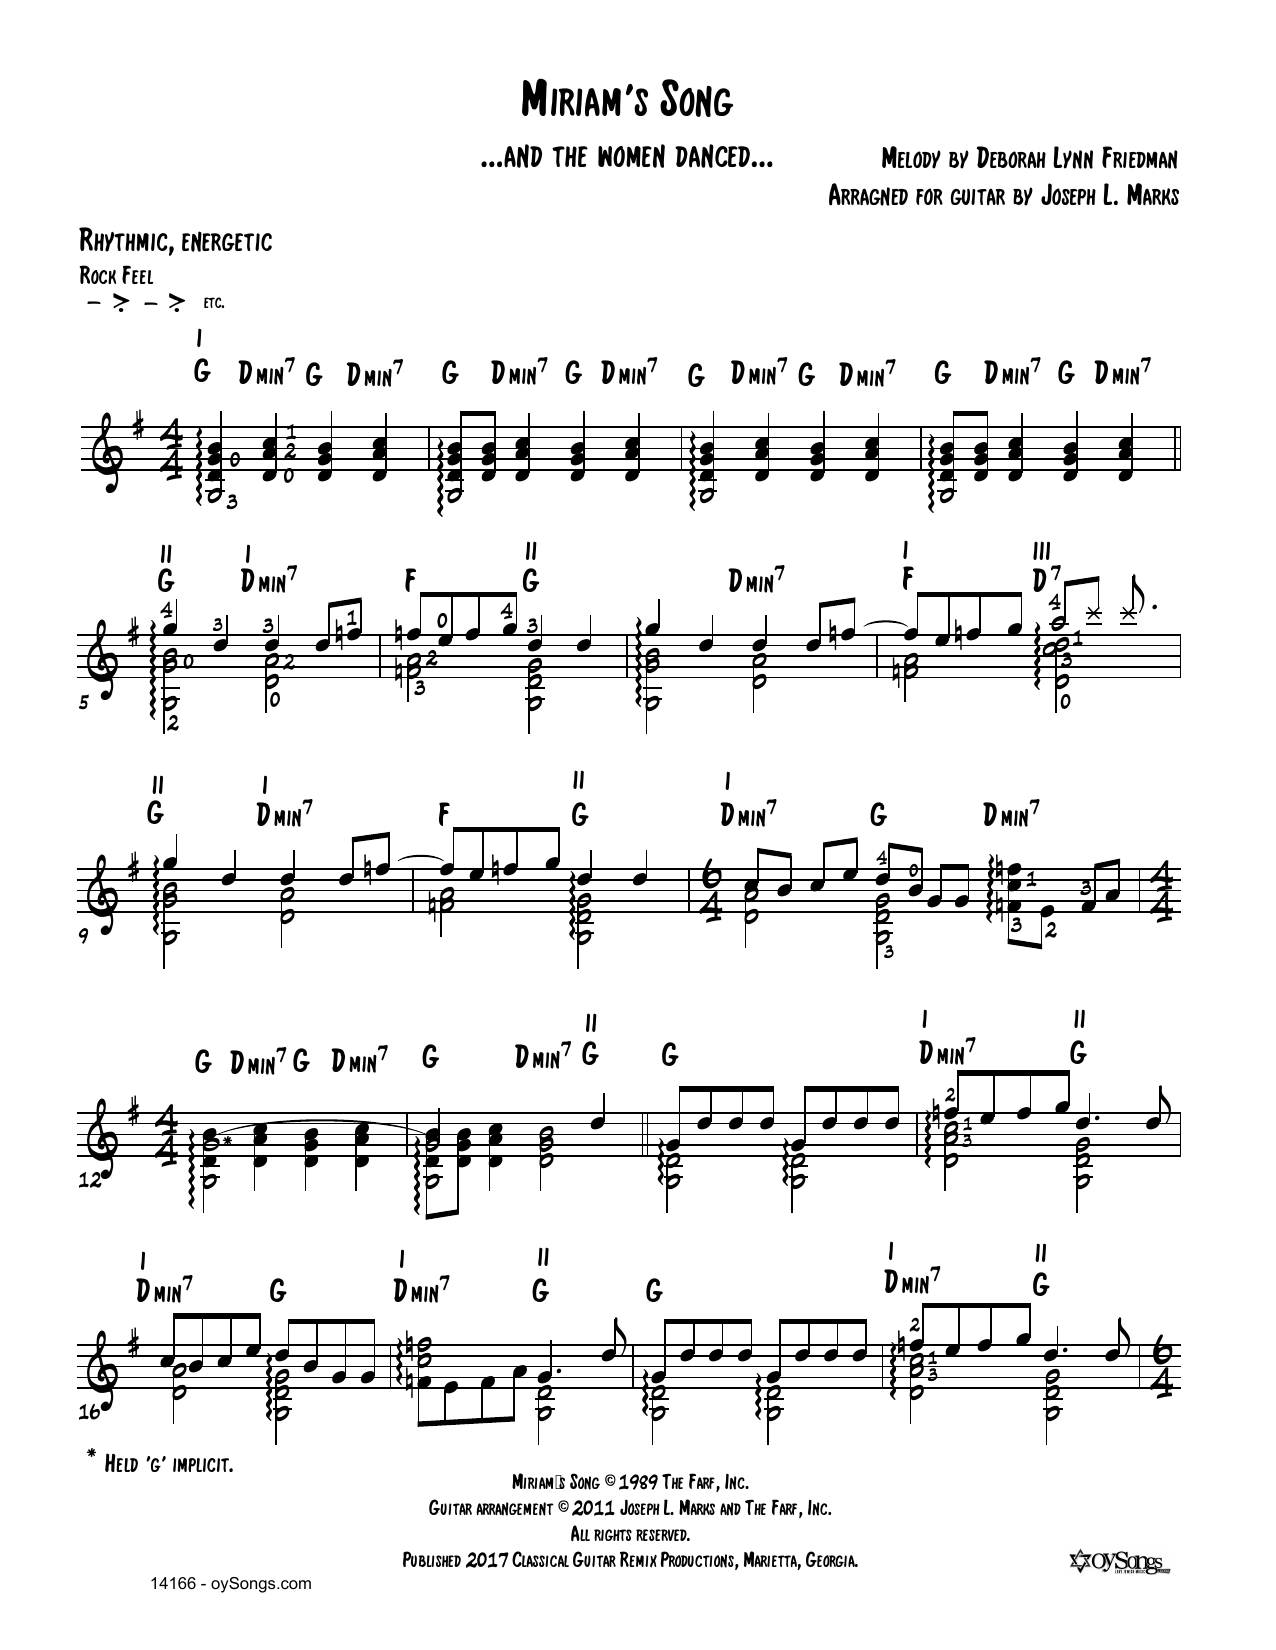 Debbie Friedman Miriam's Song (arr. Joe Marks) Sheet Music Notes & Chords for Guitar Tab - Download or Print PDF